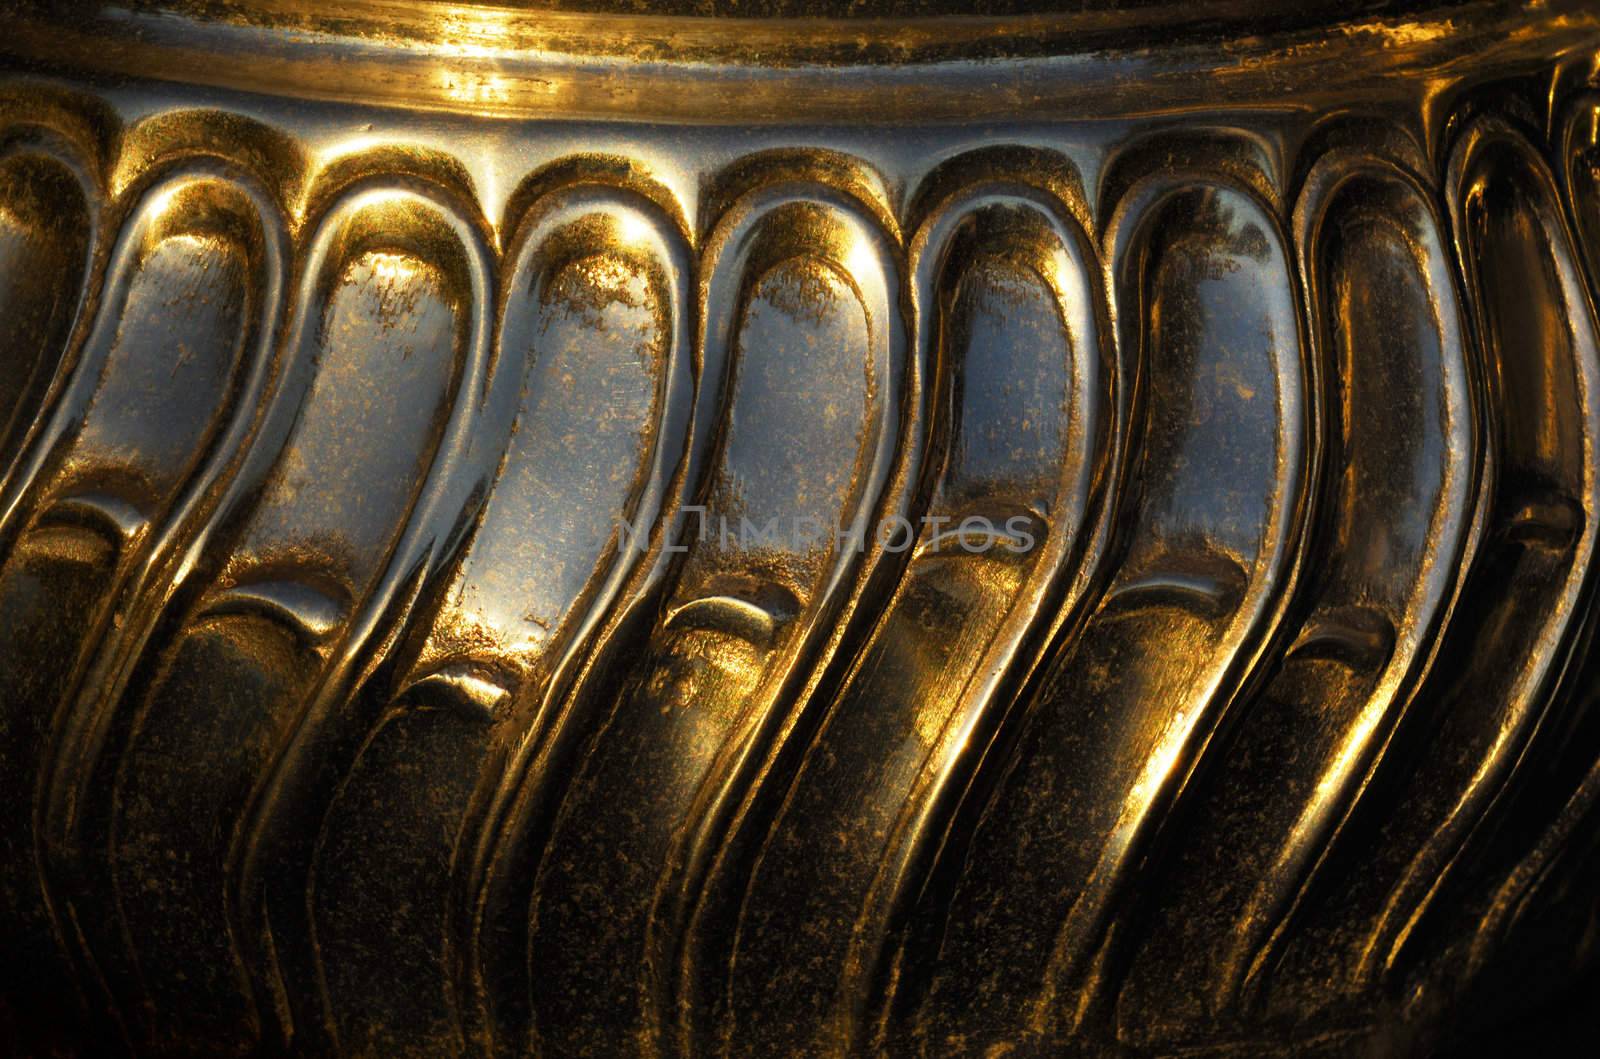 Close-up shot of an antique metallic fruit bowl with an interesting pattern design